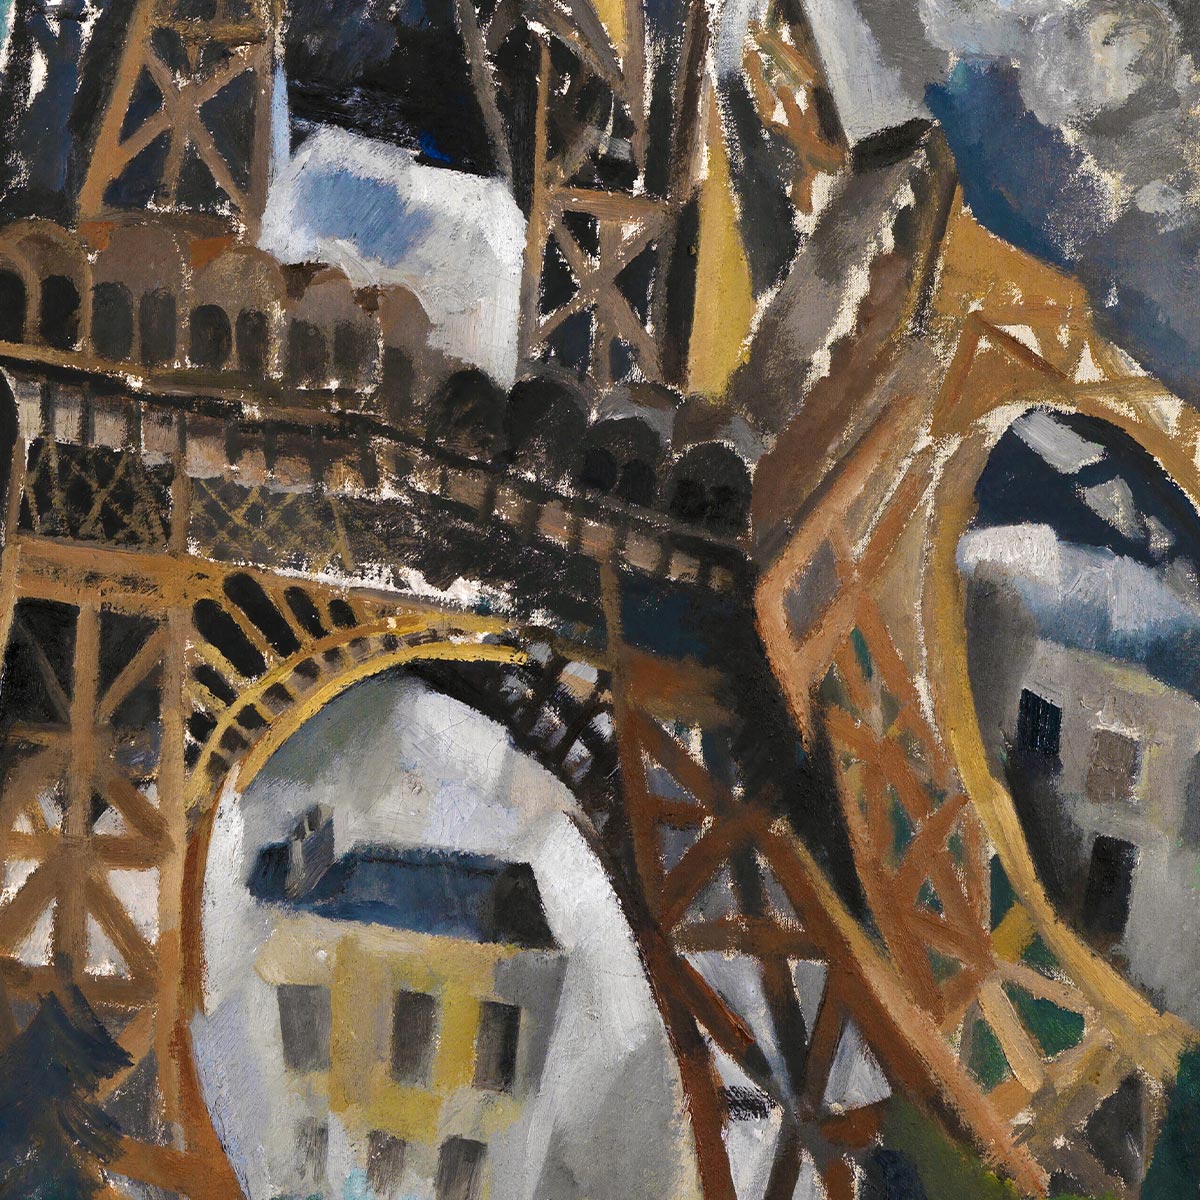 The Eiffel Tower Art Print by Robert Delauney